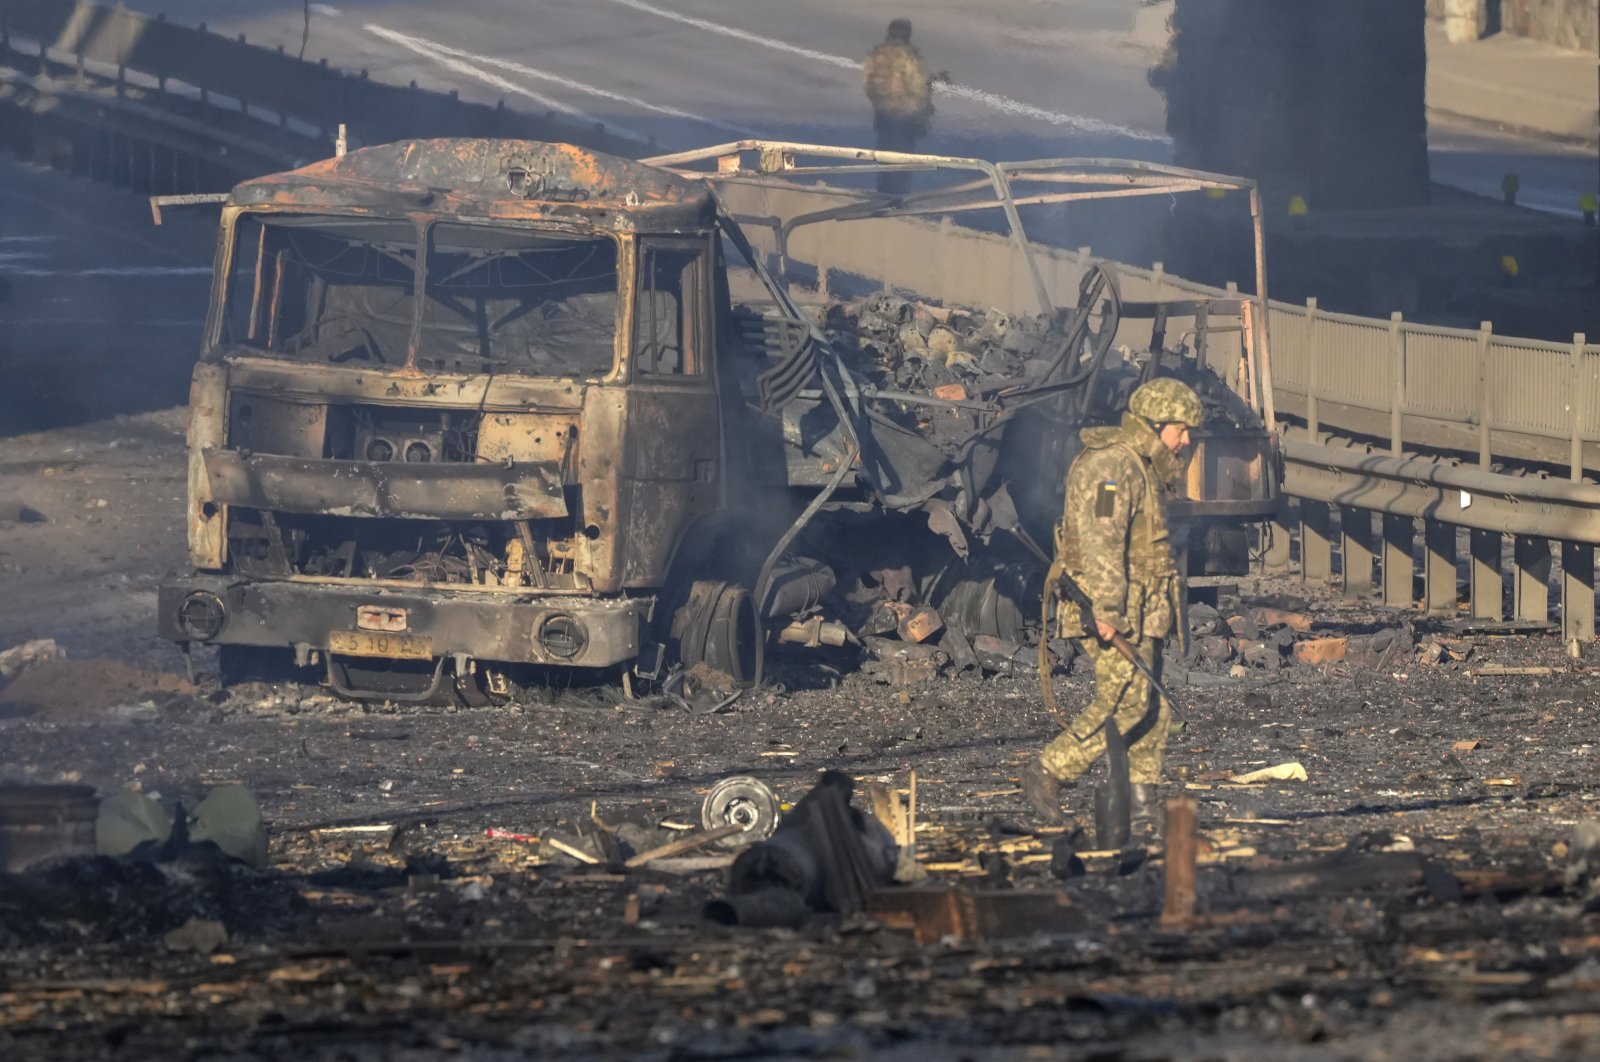 A Ukrainian soldier walks past debris of a burning military truck, on a street in Kyiv, Ukraine, Feb. 26, 2022. (AP Photo)